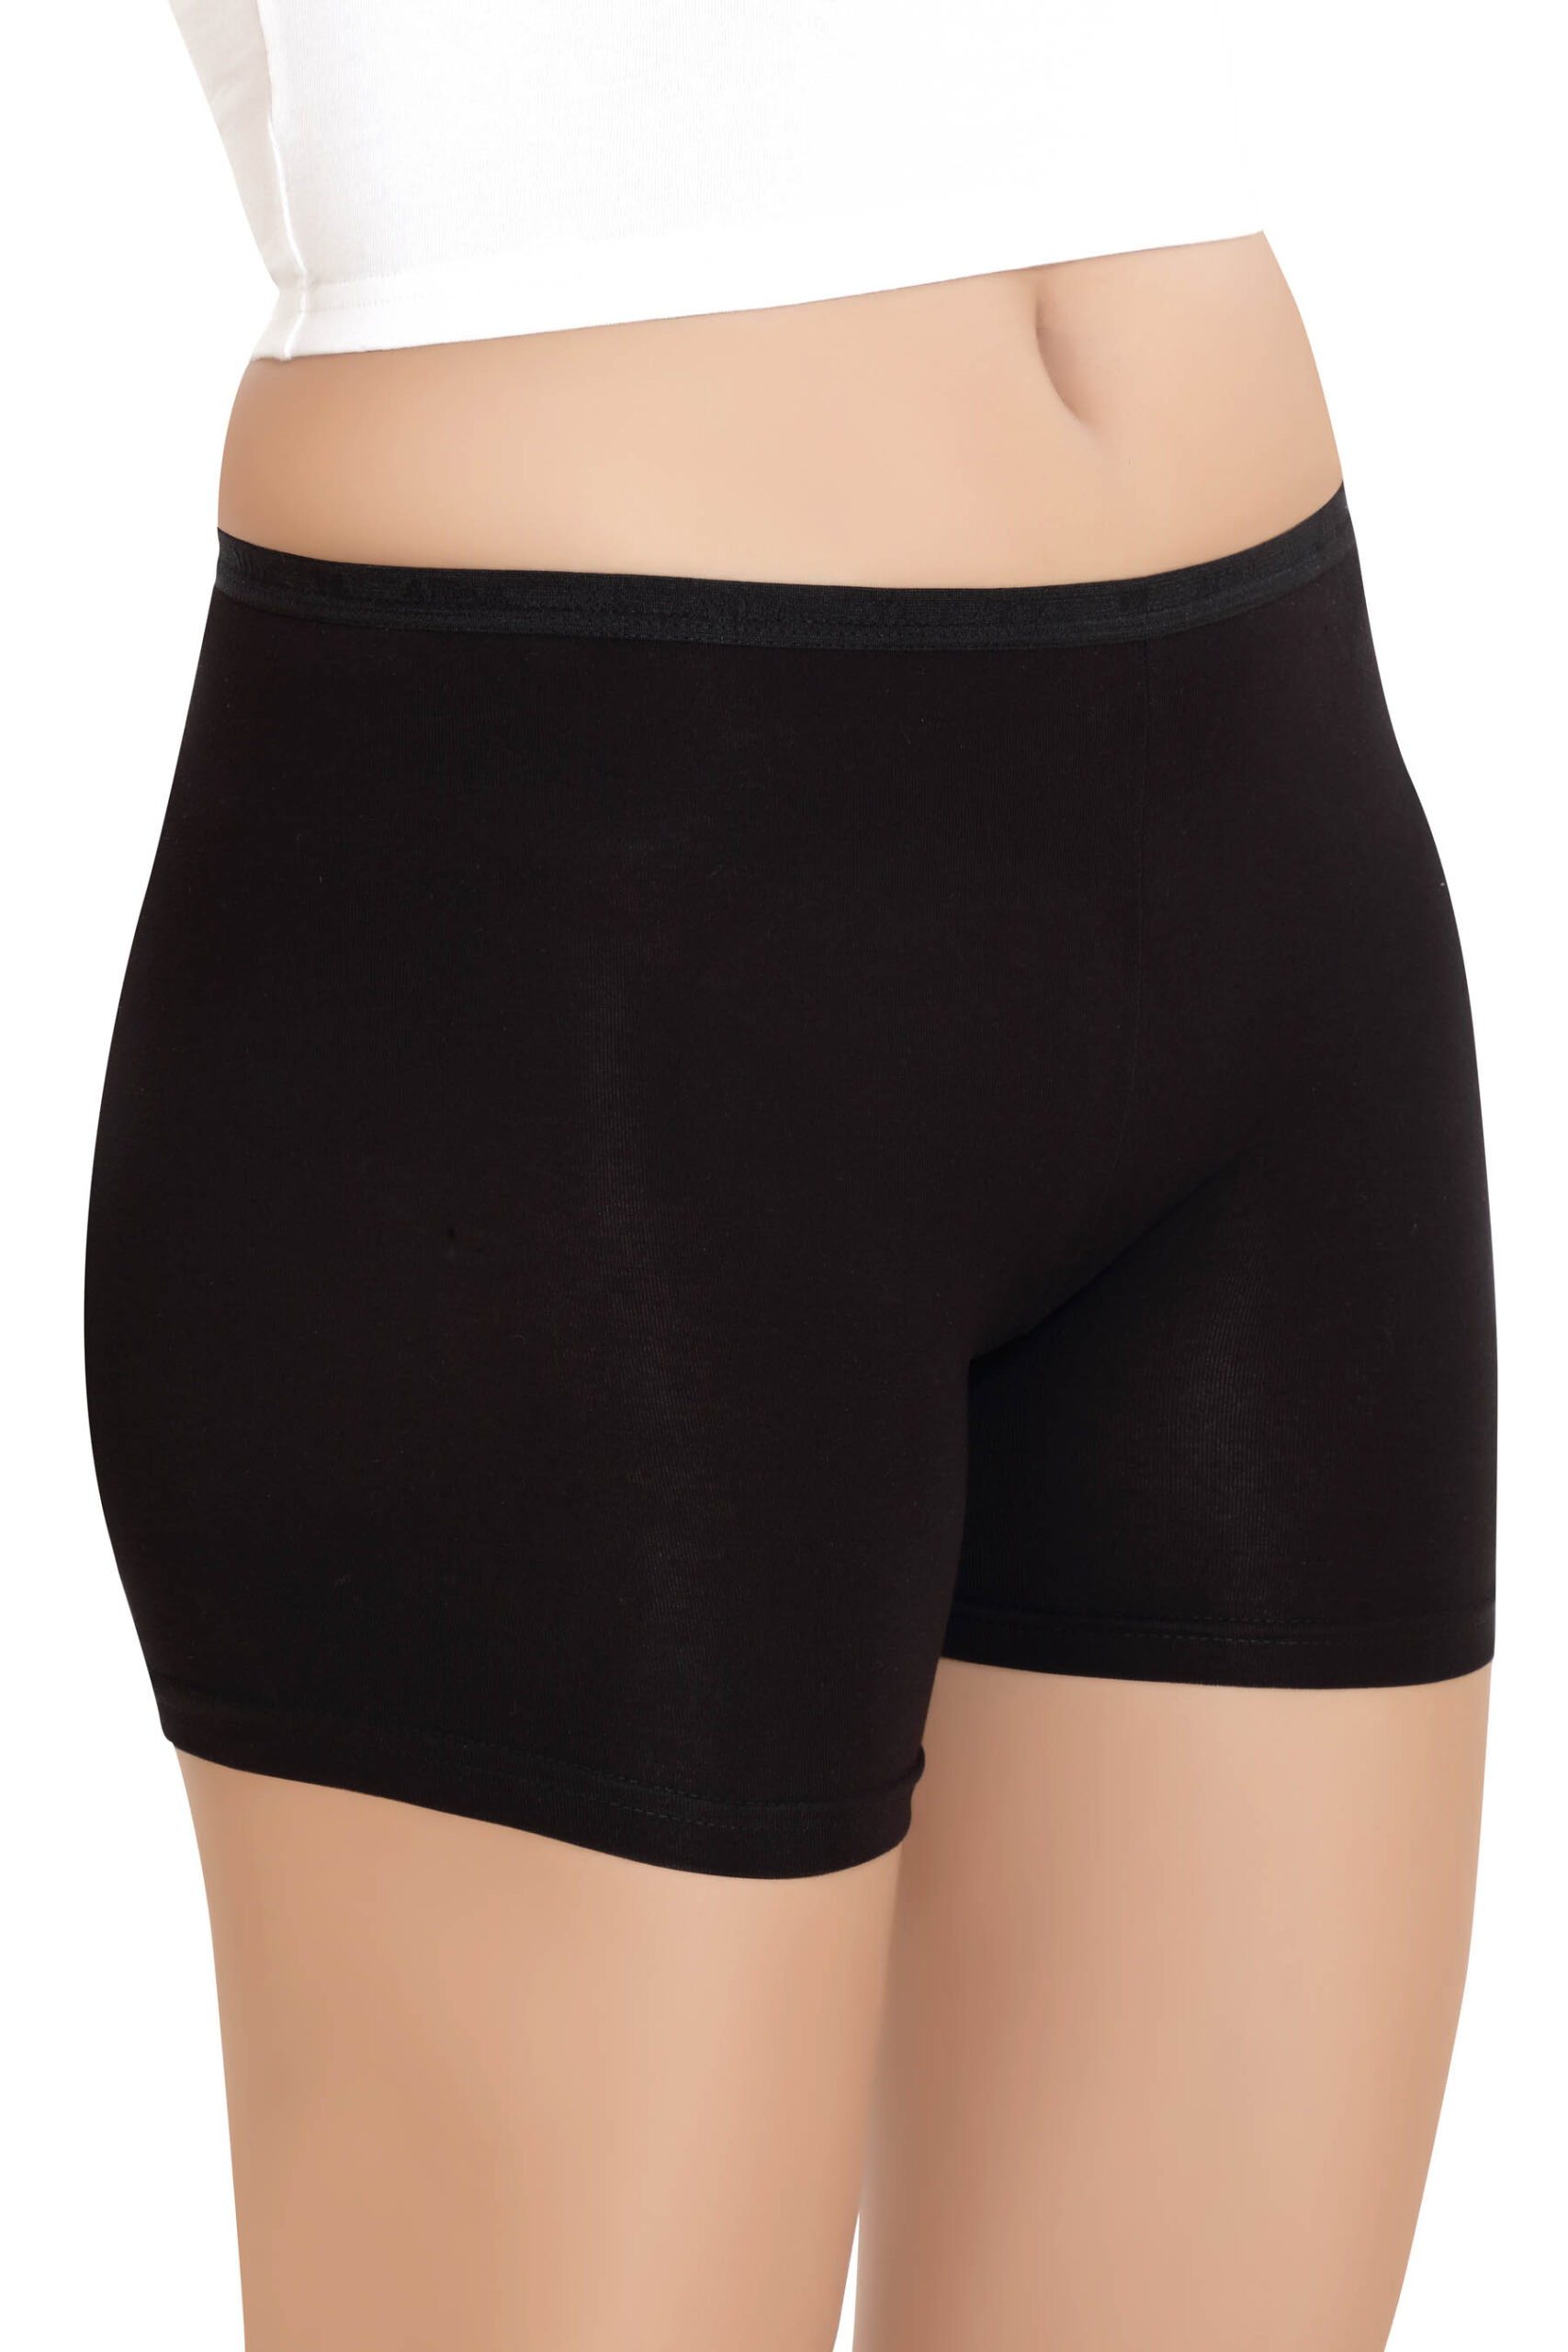 Alies Boy Shorts Underwear for Women Boyshorts Panties Boxer Briefs Smooth  Slip Short Panty – Owomaniyah